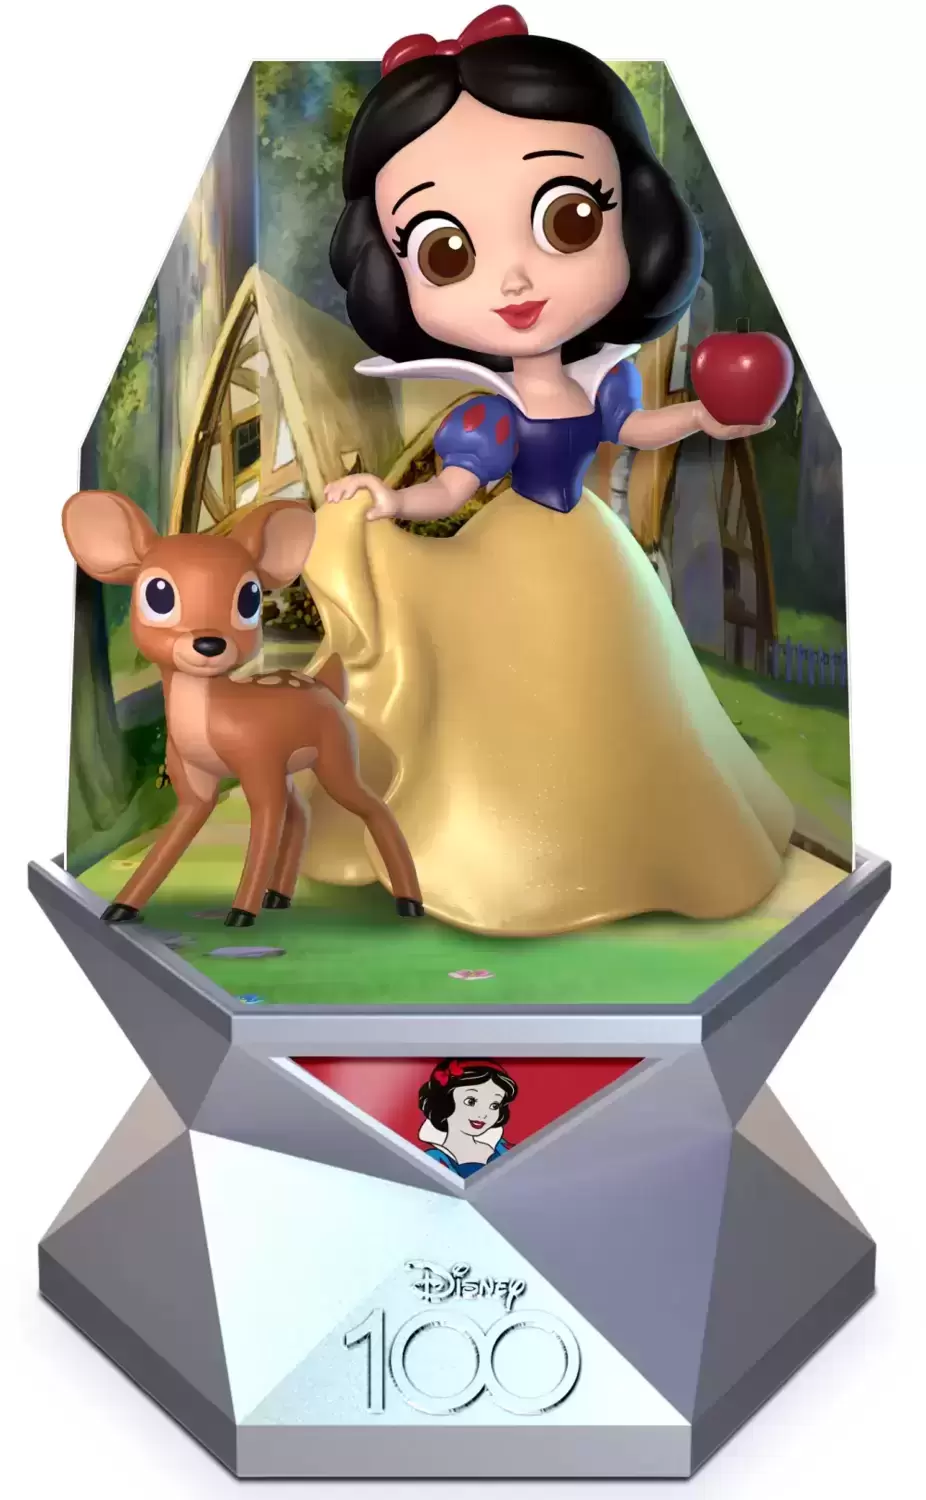 Snow White and The Seven Dwarfs - Disney 100 surprise capsule